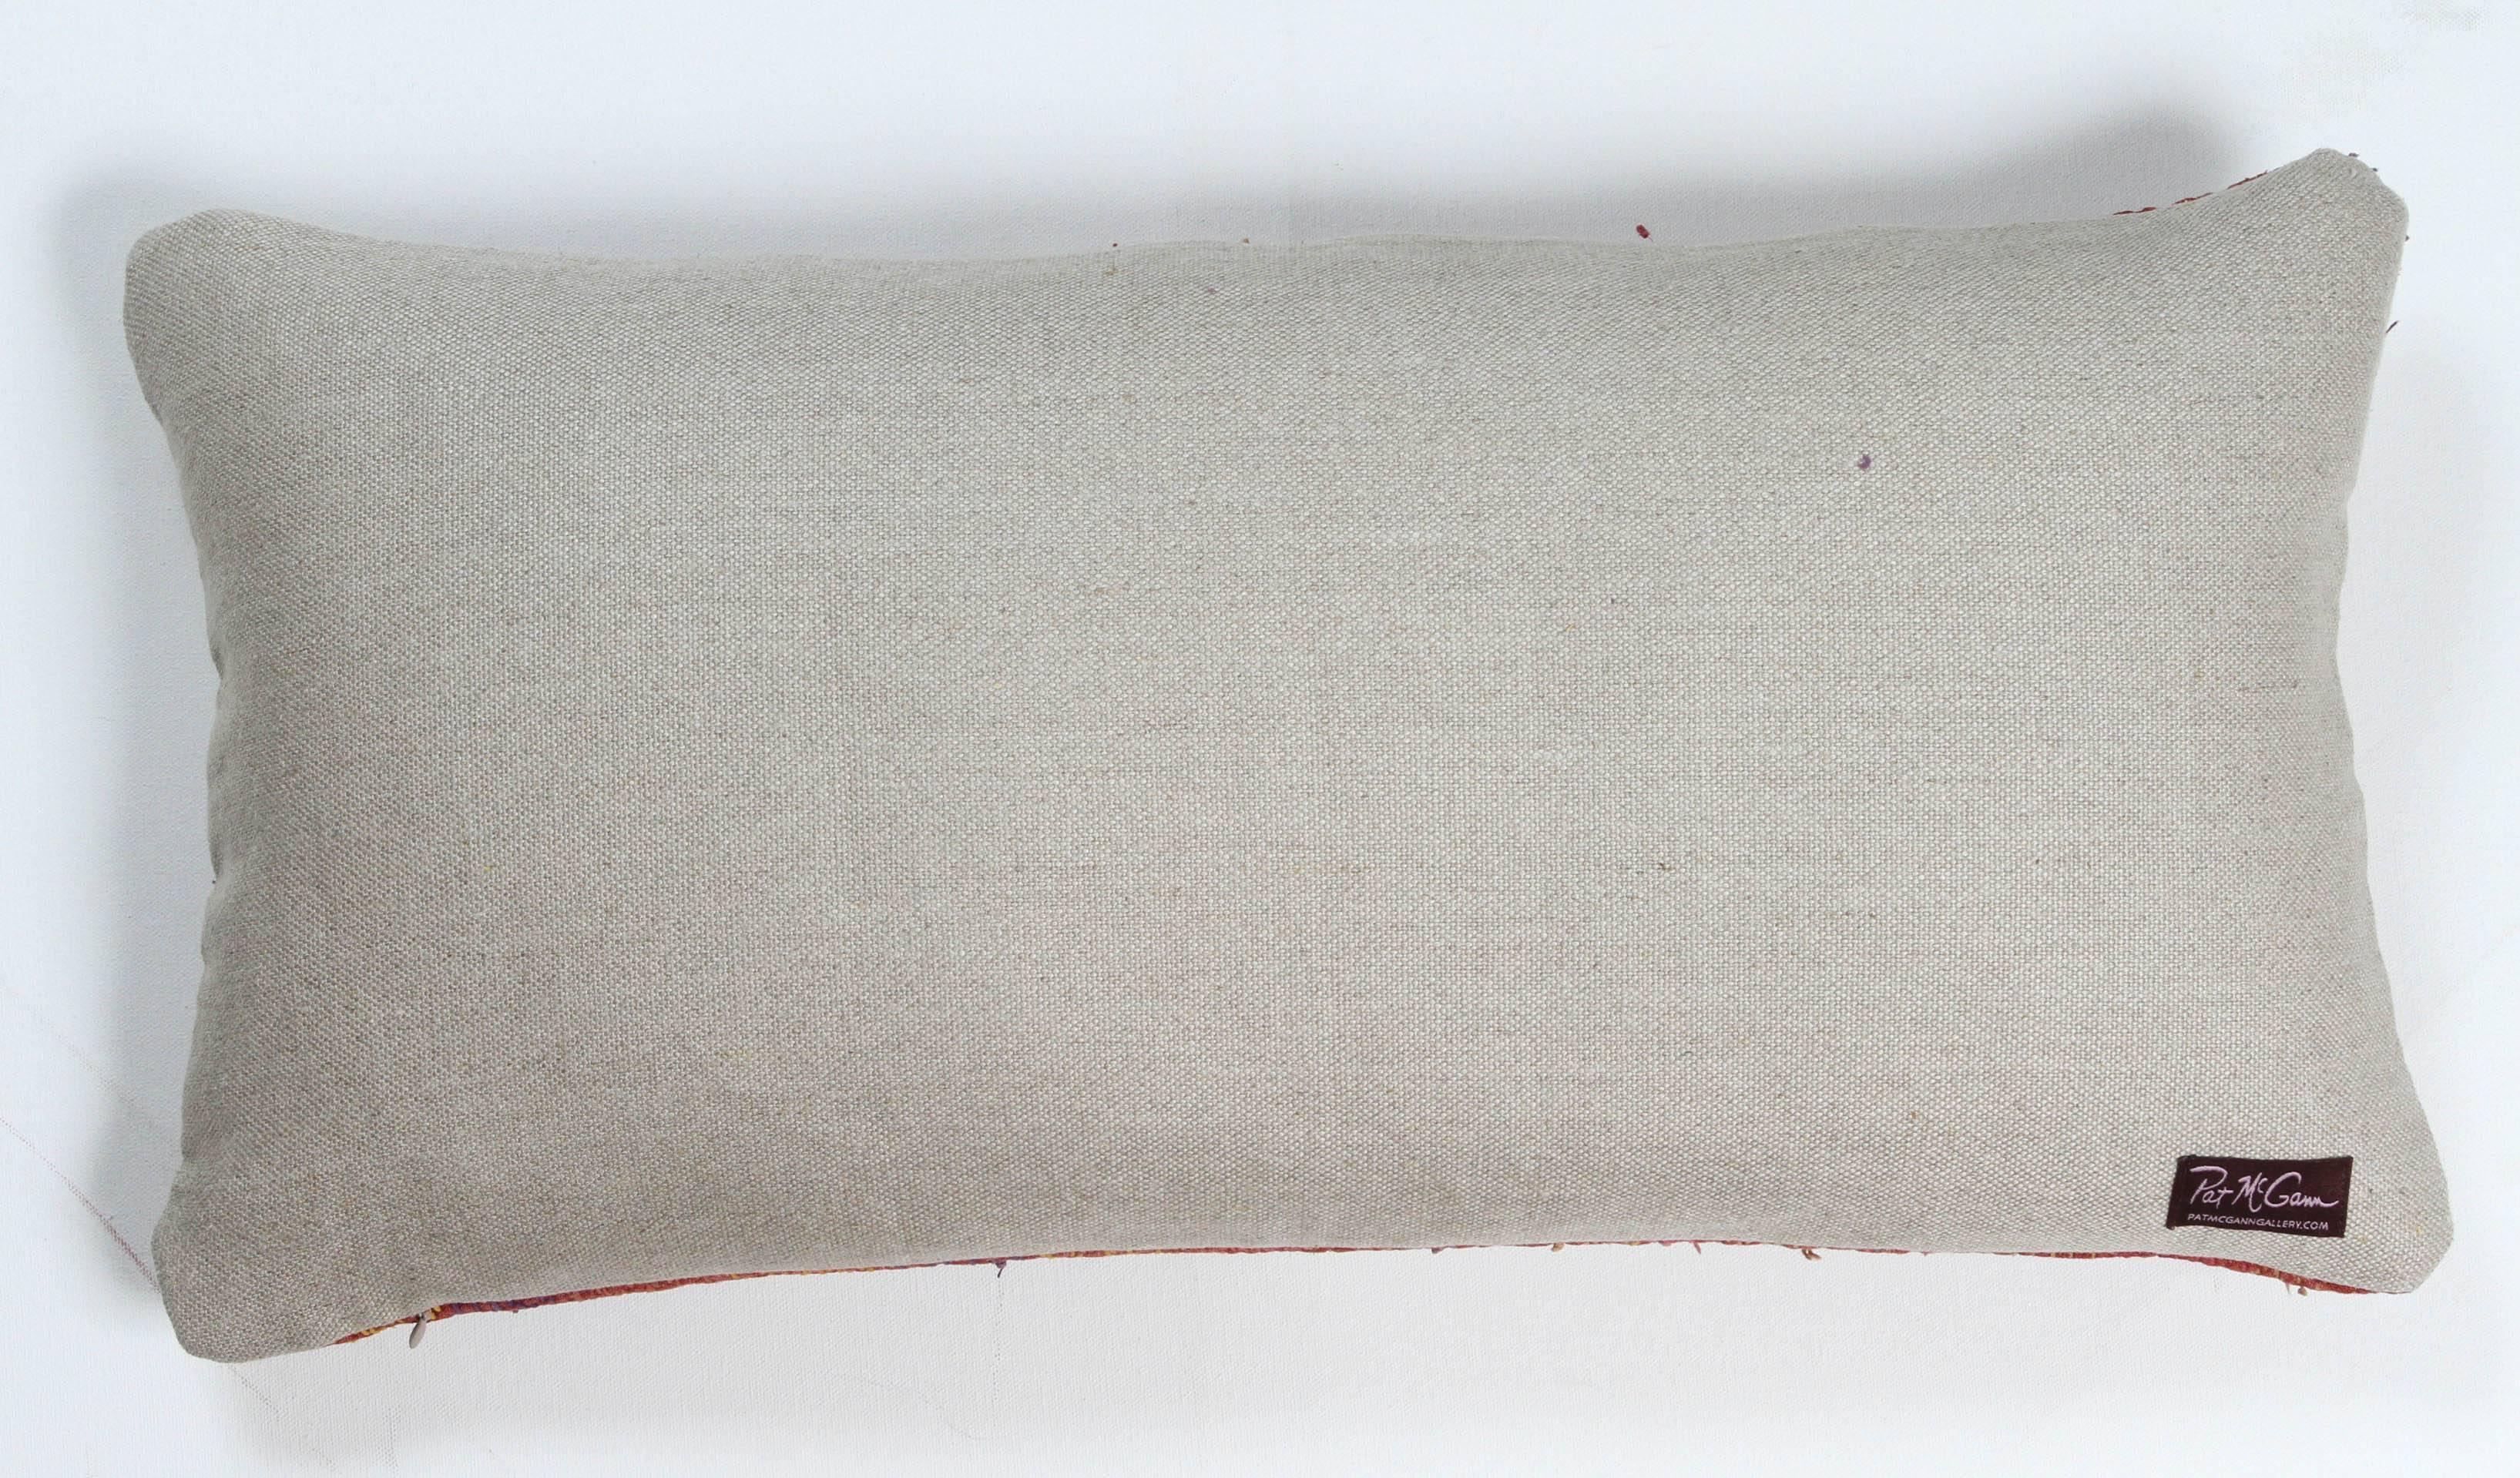 Quilted Banjara Overstitch Pillow, Kantha Stitching over Block Print